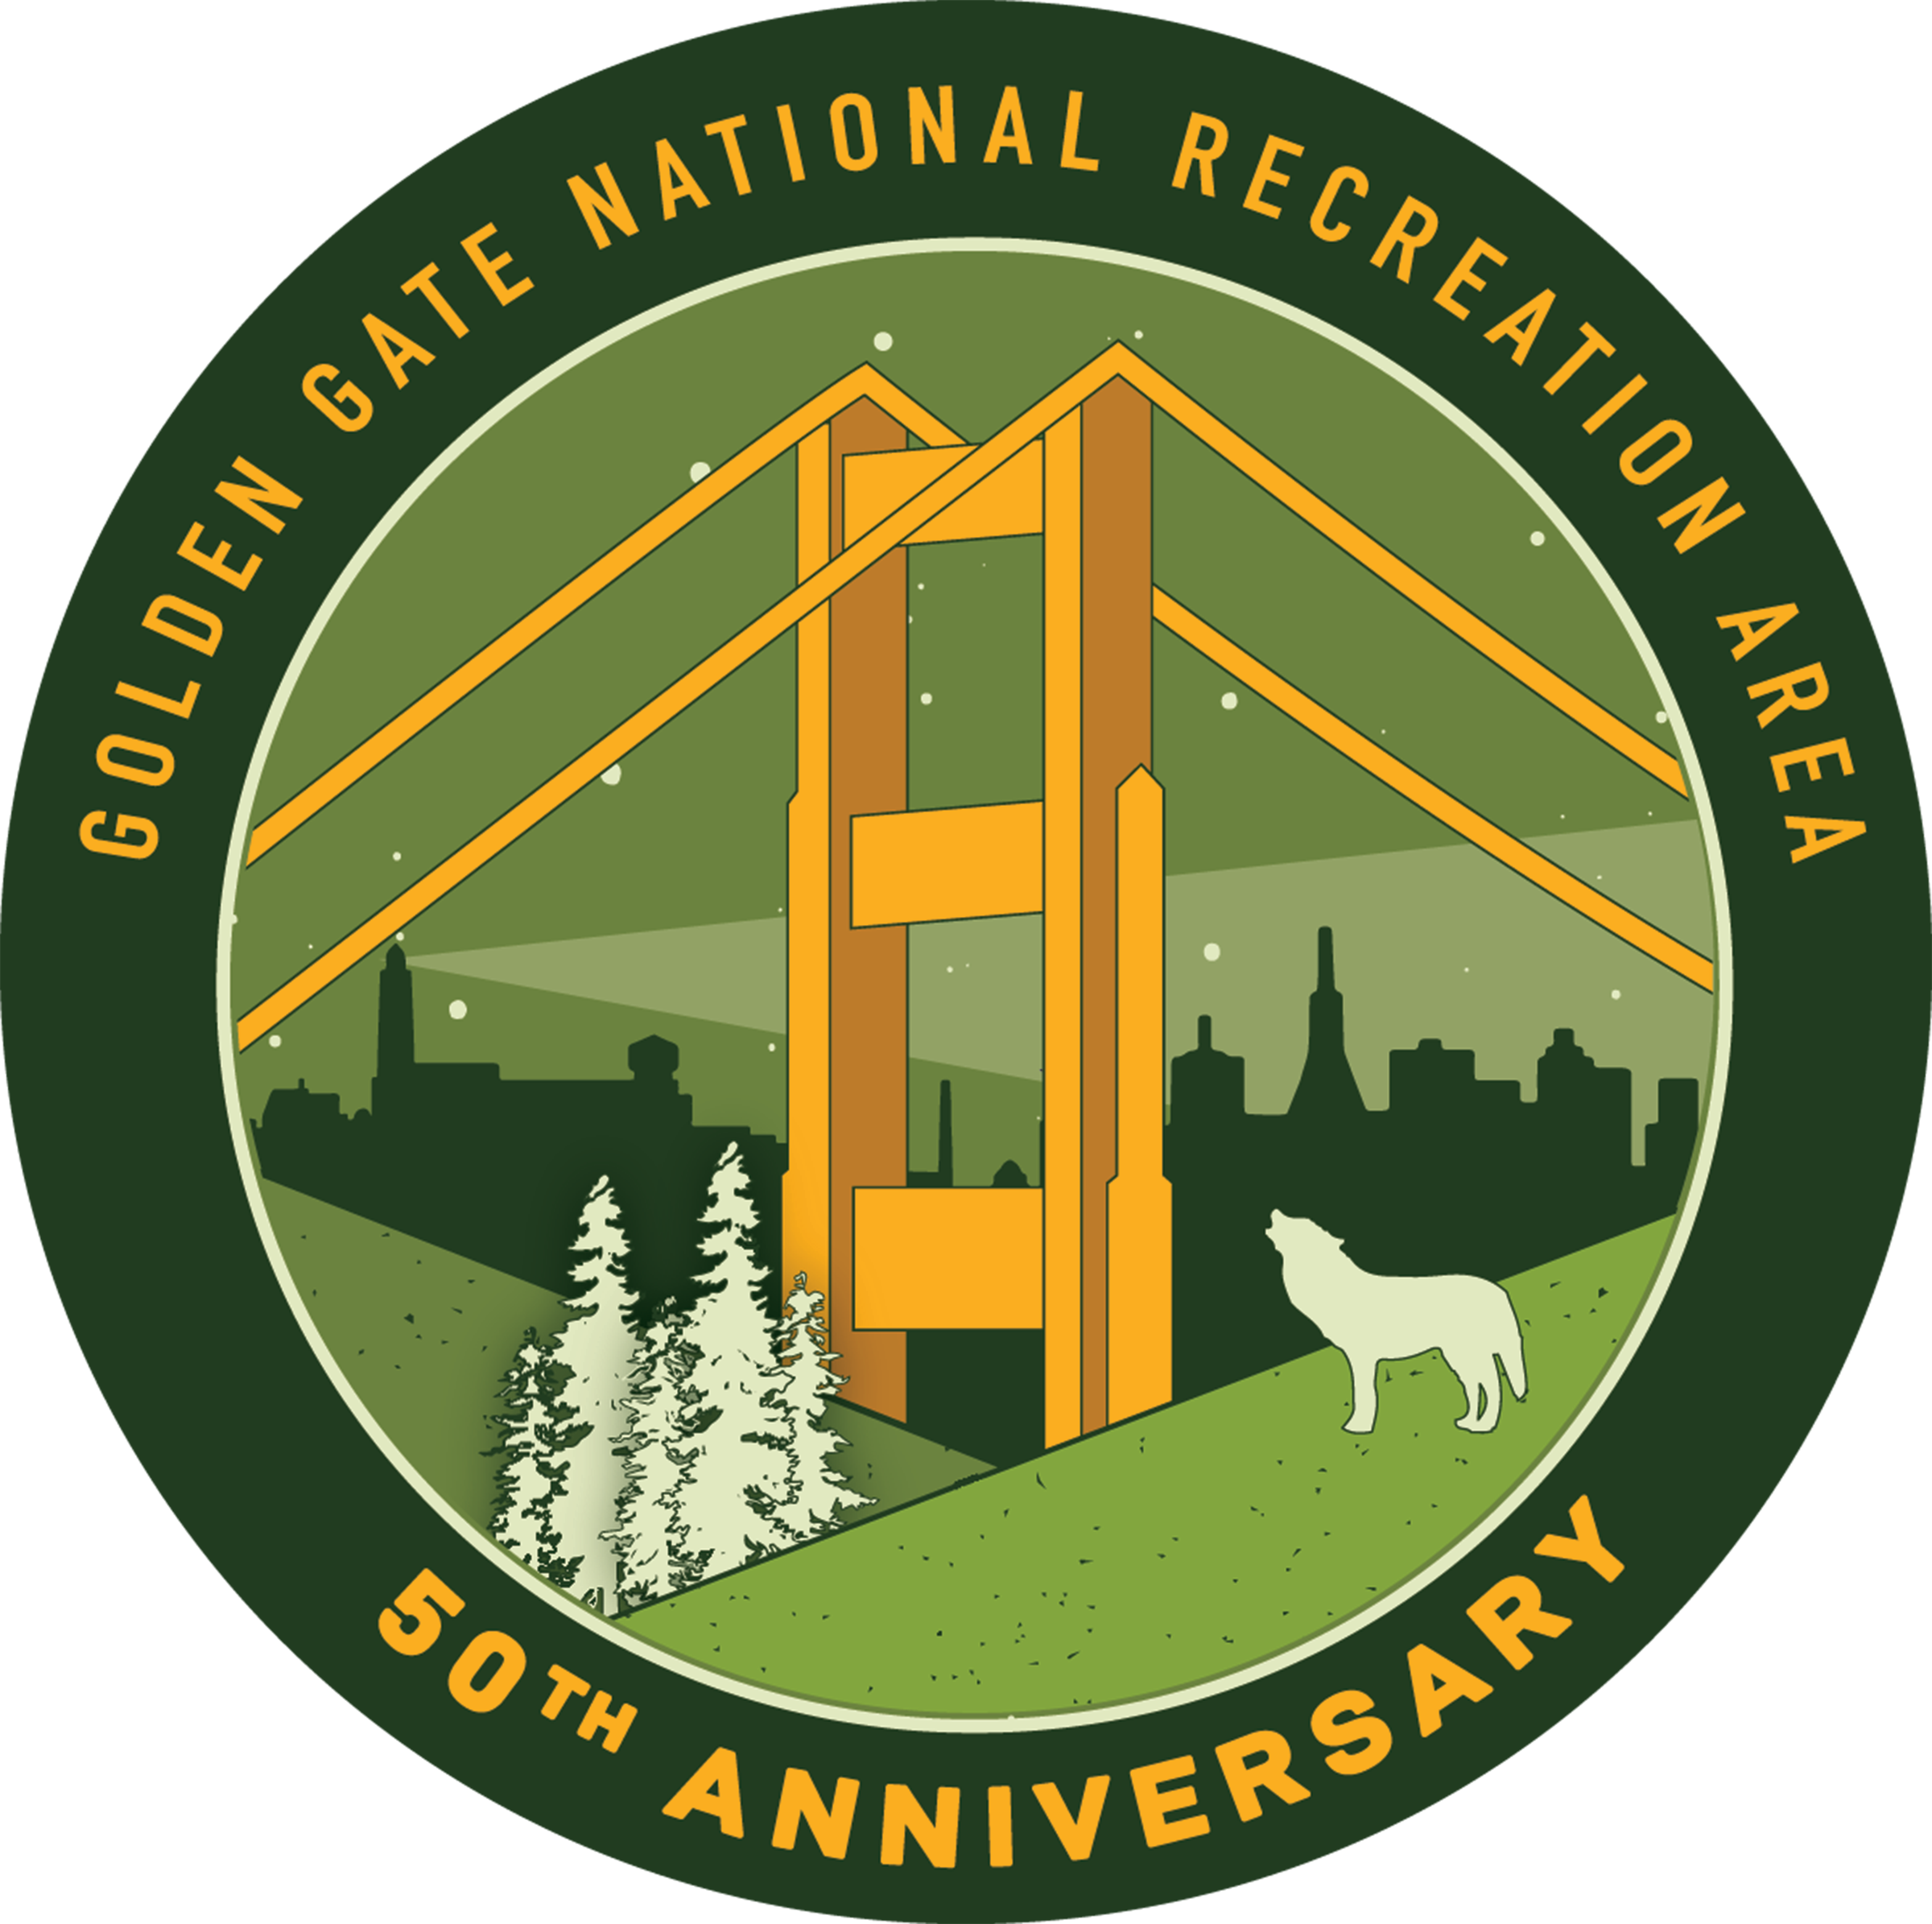 Golden Gate's Anniversary Events - Golden Gate National Recreation Area  (. National Park Service)